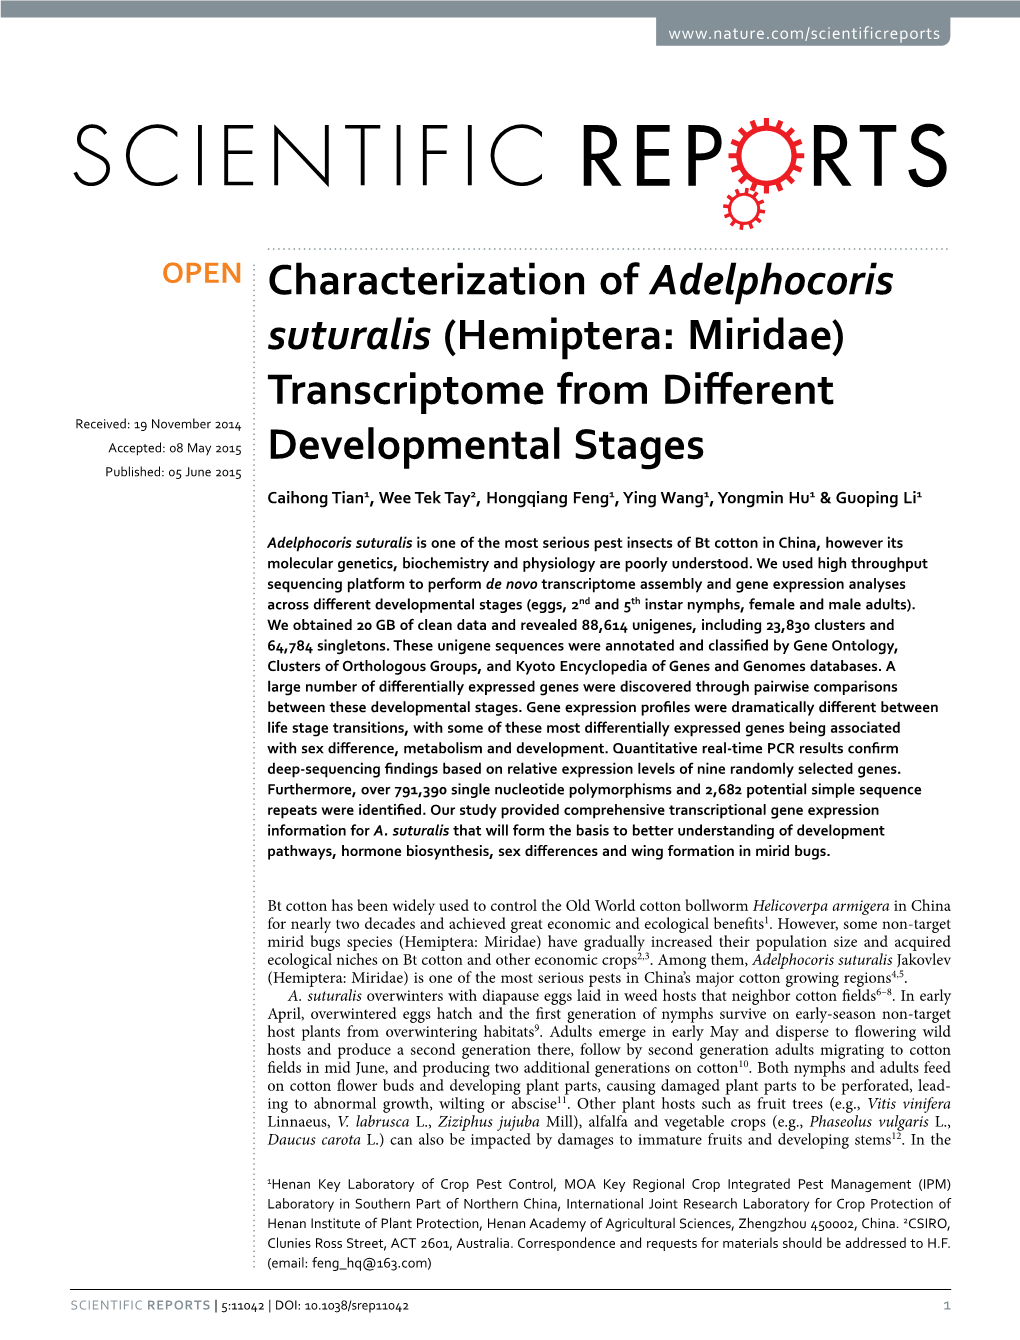 Characterization of Adelphocoris Suturalis (Hemiptera: Miridae) Transcriptome from Different Developmental Stages